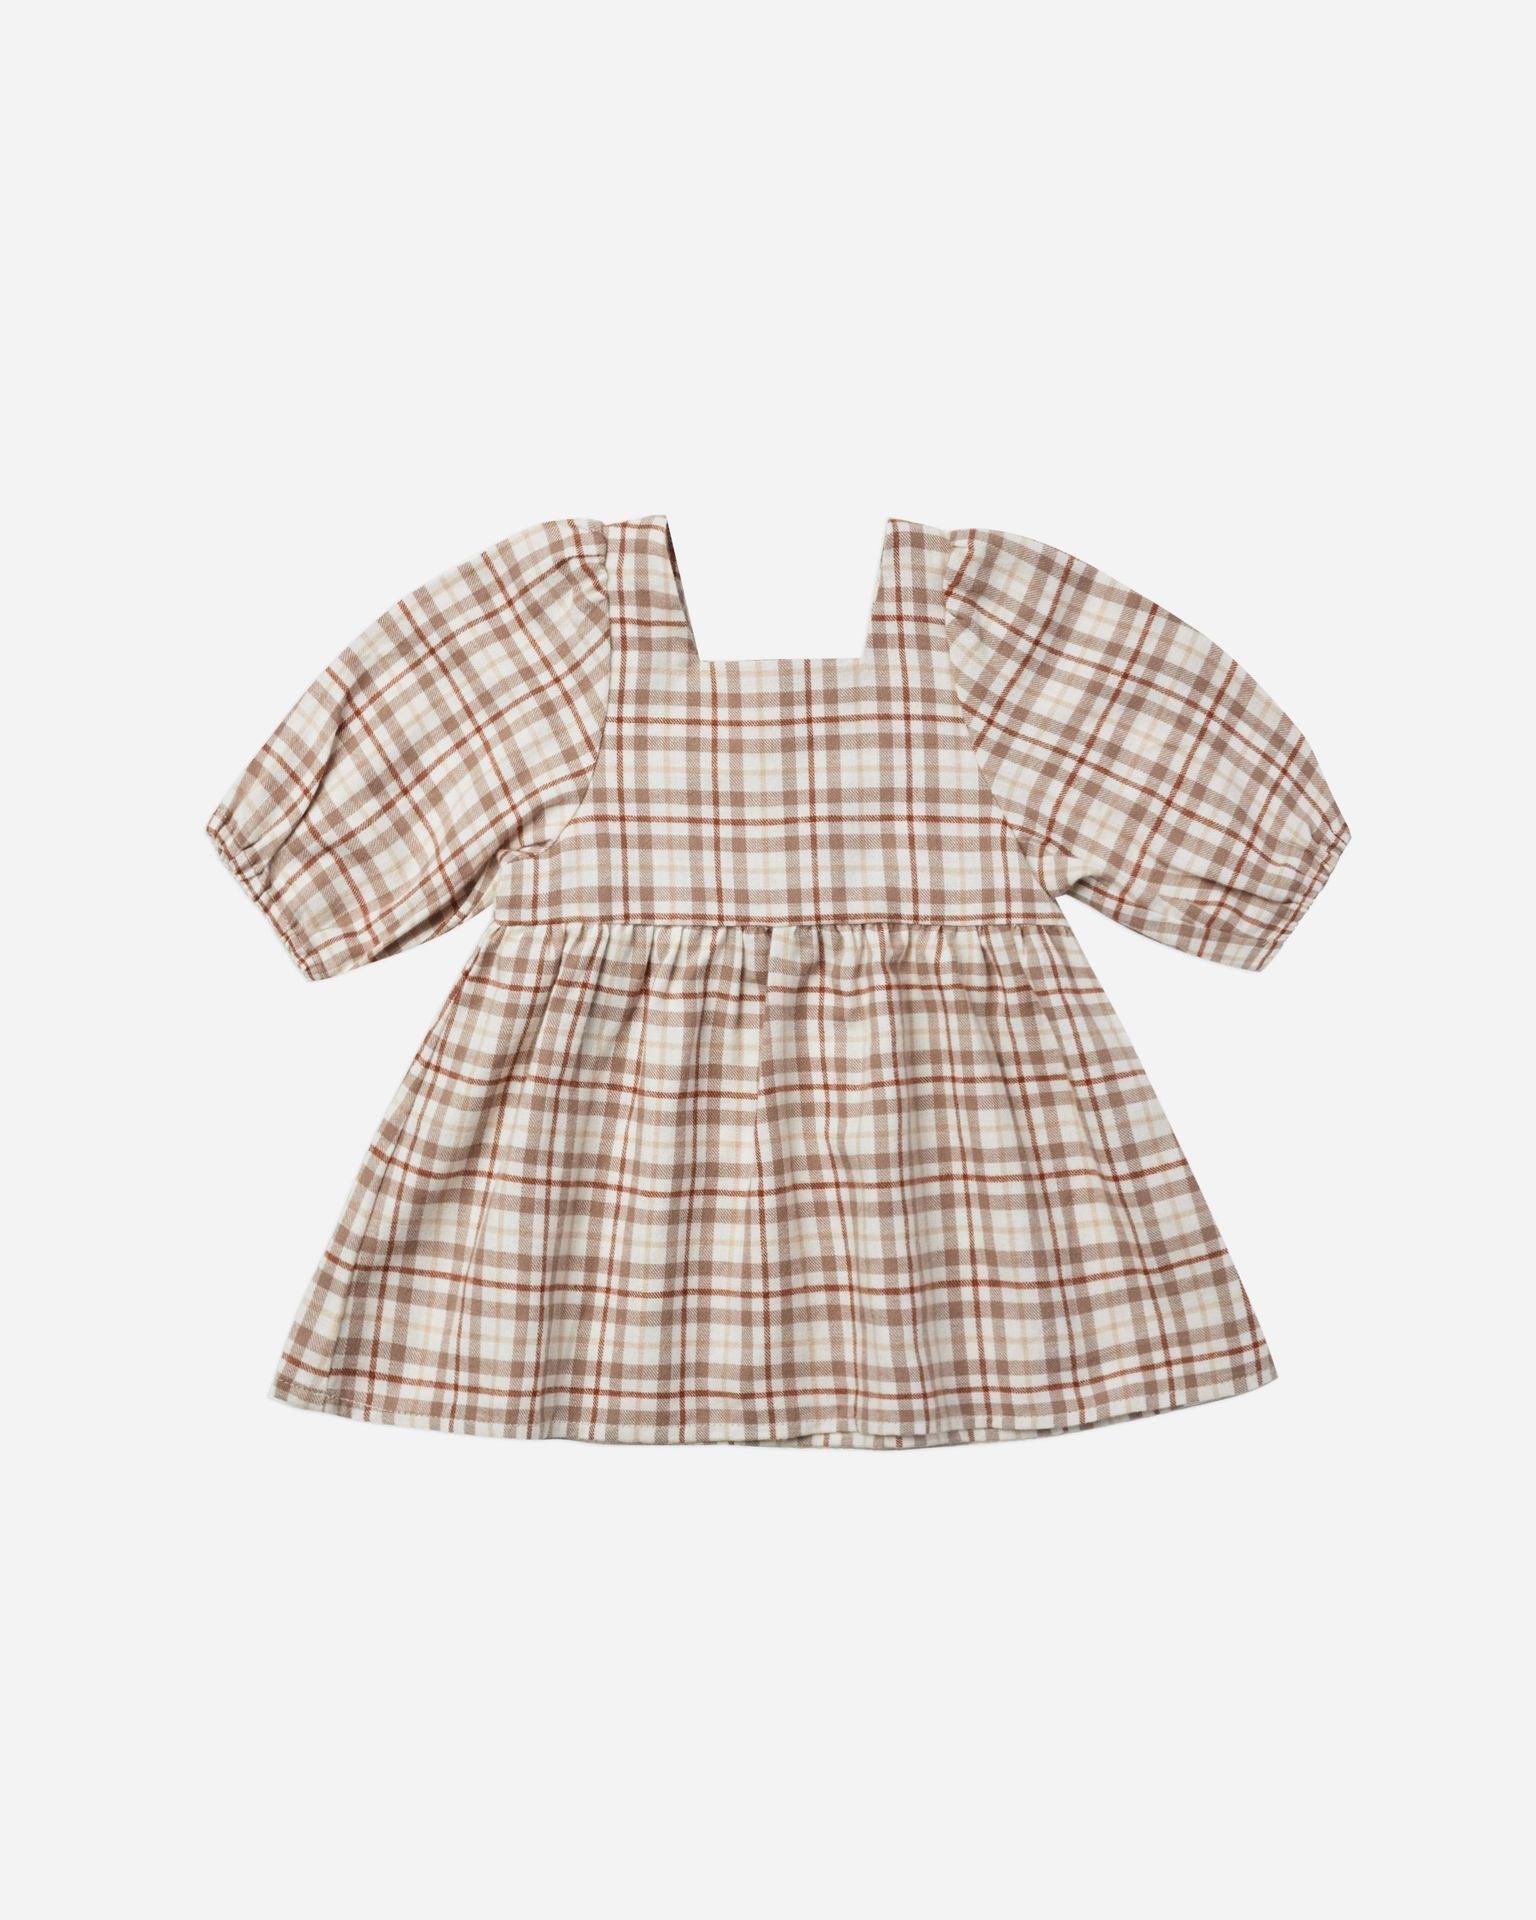 gretta babydoll dress || mocha plaid - Rylee + Cru | Kids Clothes | Trendy Baby Clothes | Modern Infant Outfits |